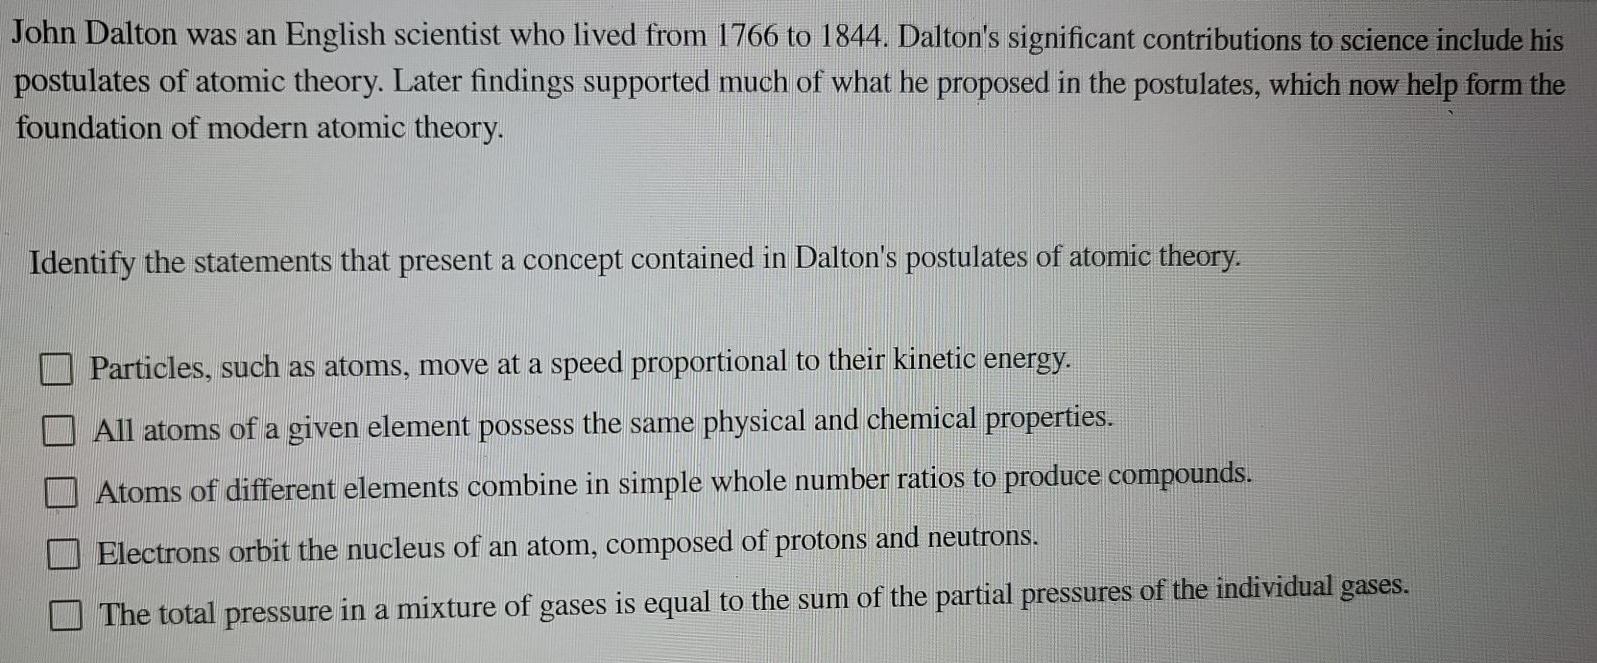 what did john dalton contribute to science